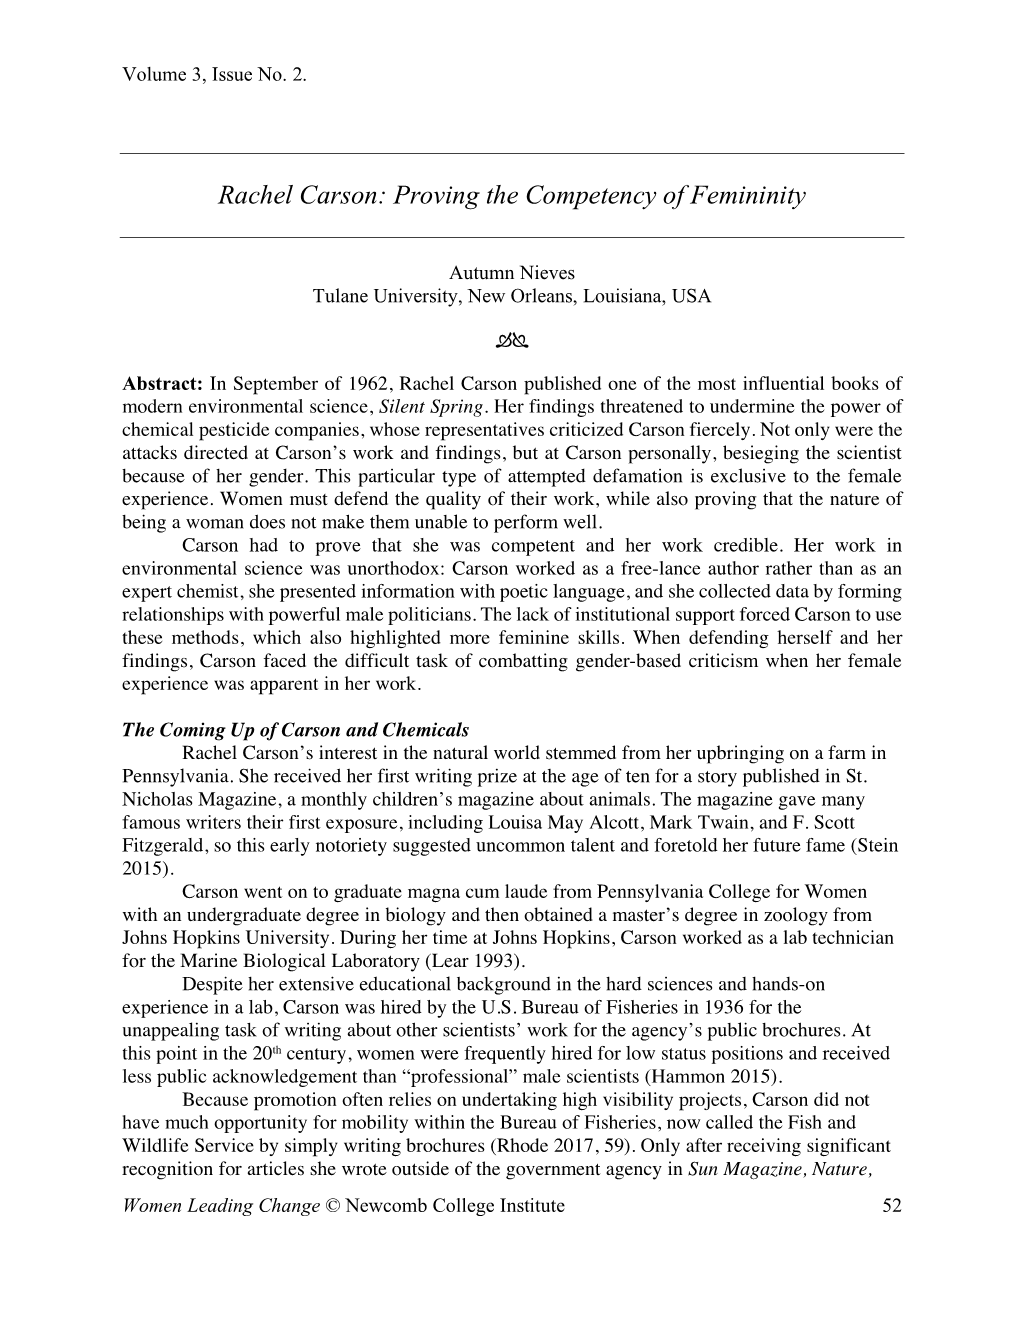 Rachel Carson: Proving the Competency of Femininity